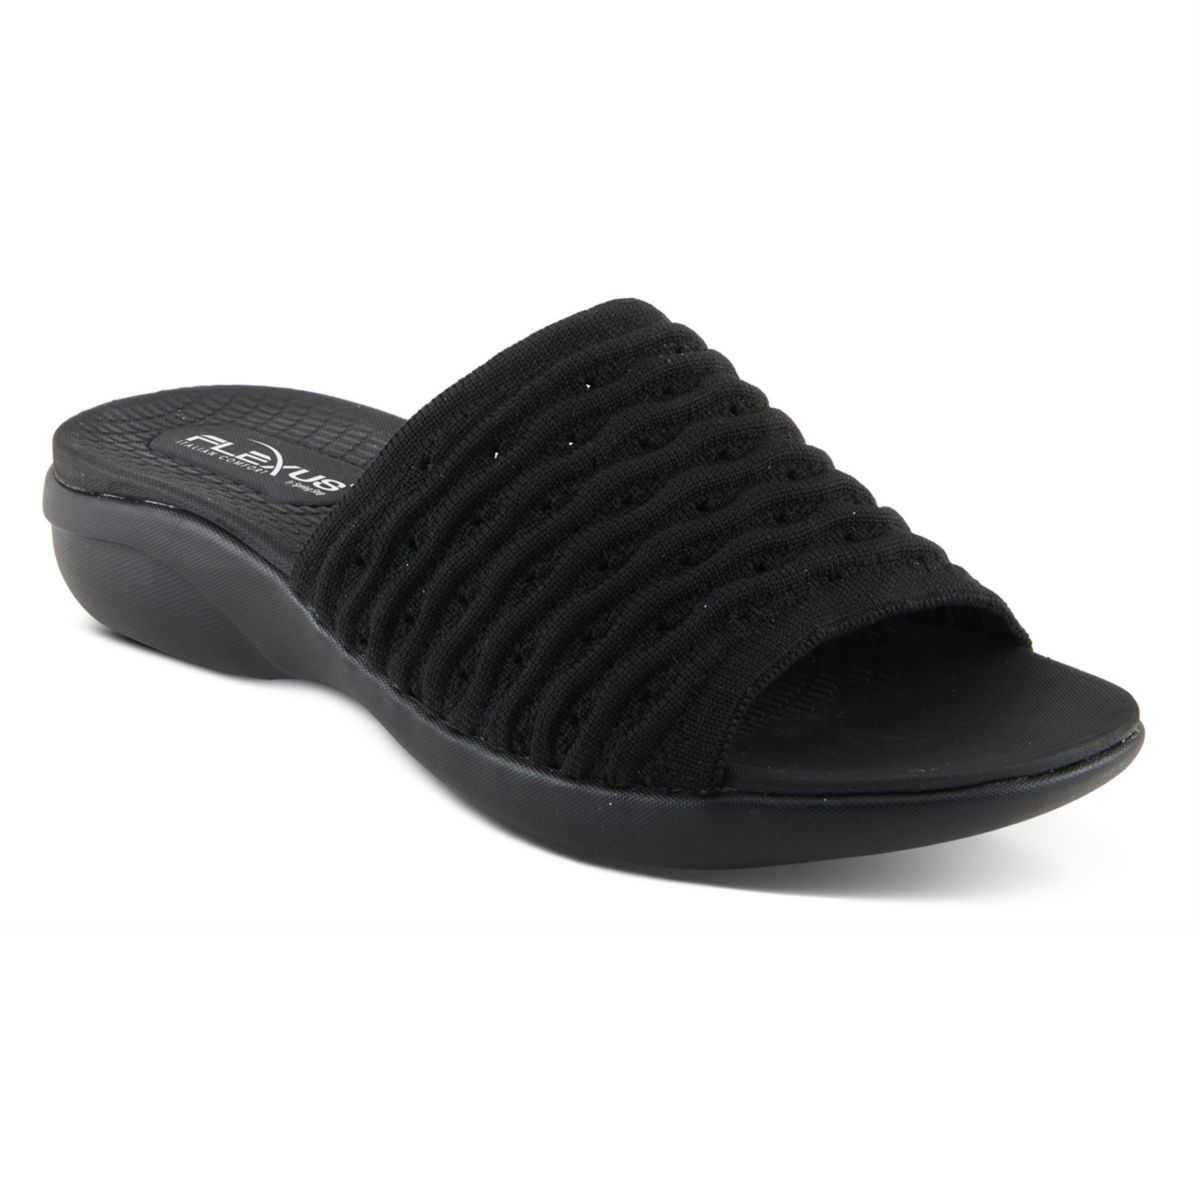 Flexus by Spring Step Deondre Women's Slide Sandals Flexus